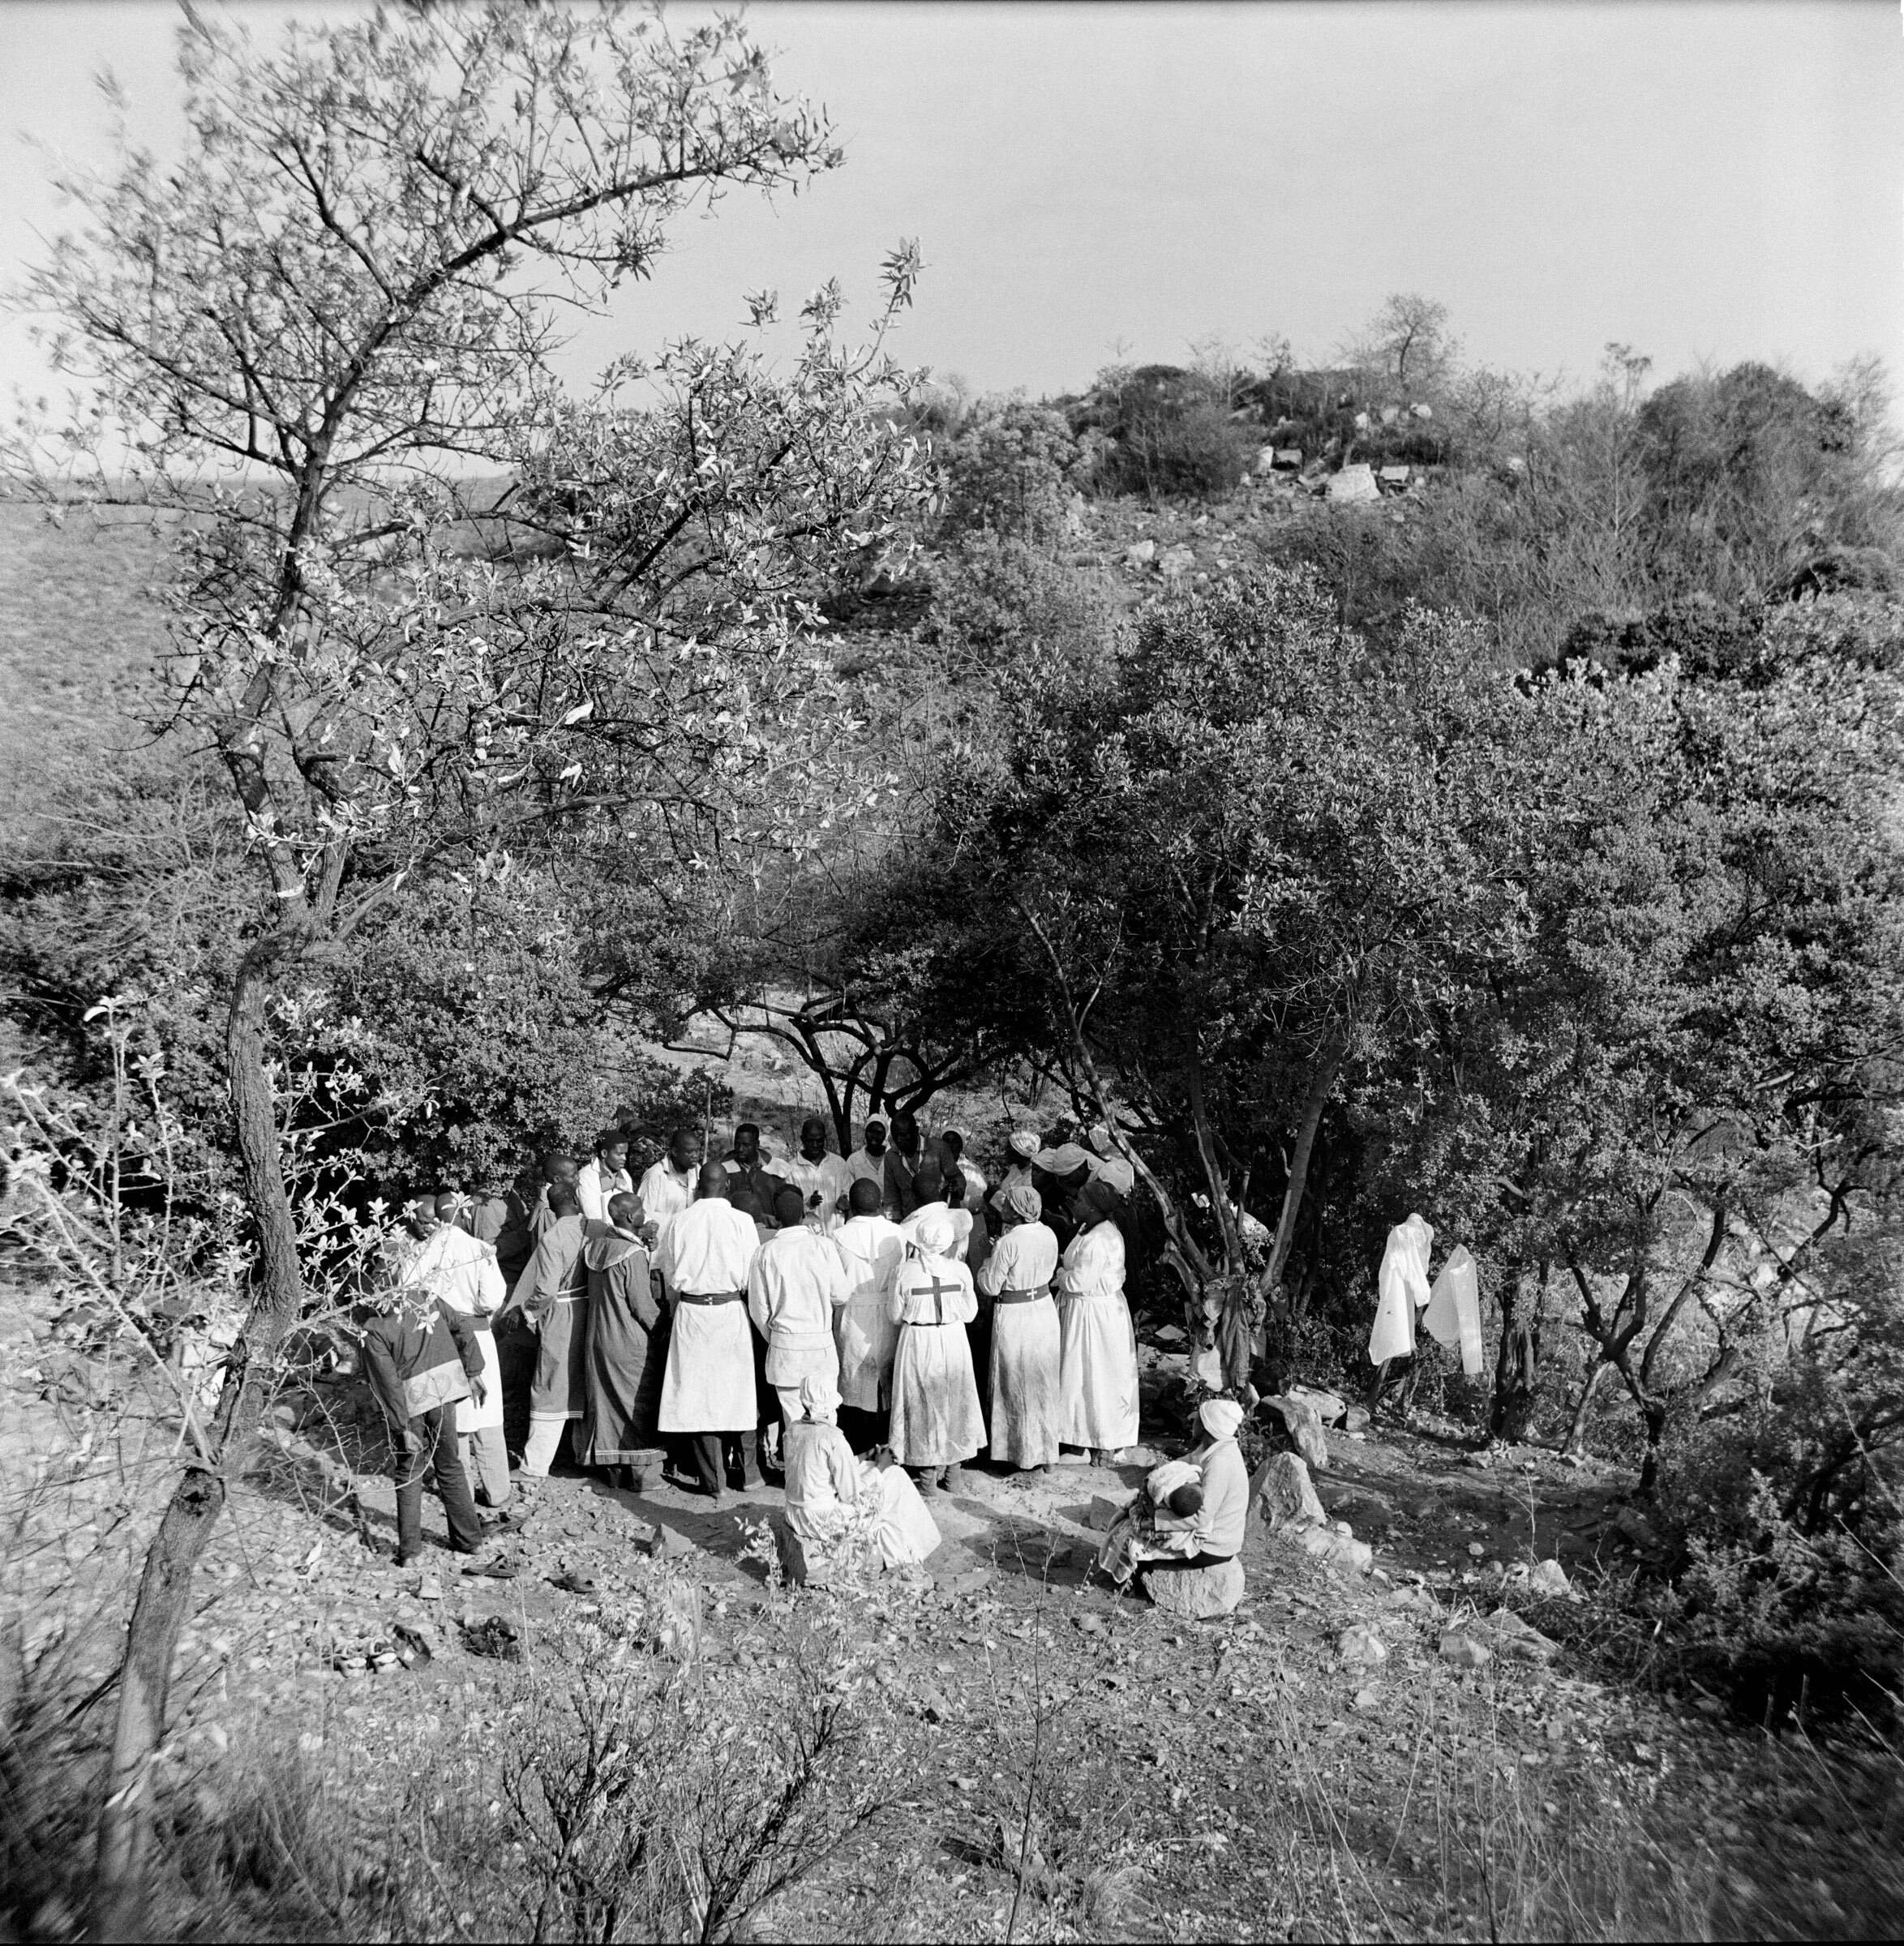  A Members of a Zionist church worship under trees, Melville Koppies, Johannesburg, 2006. photo Greg Marinovich 